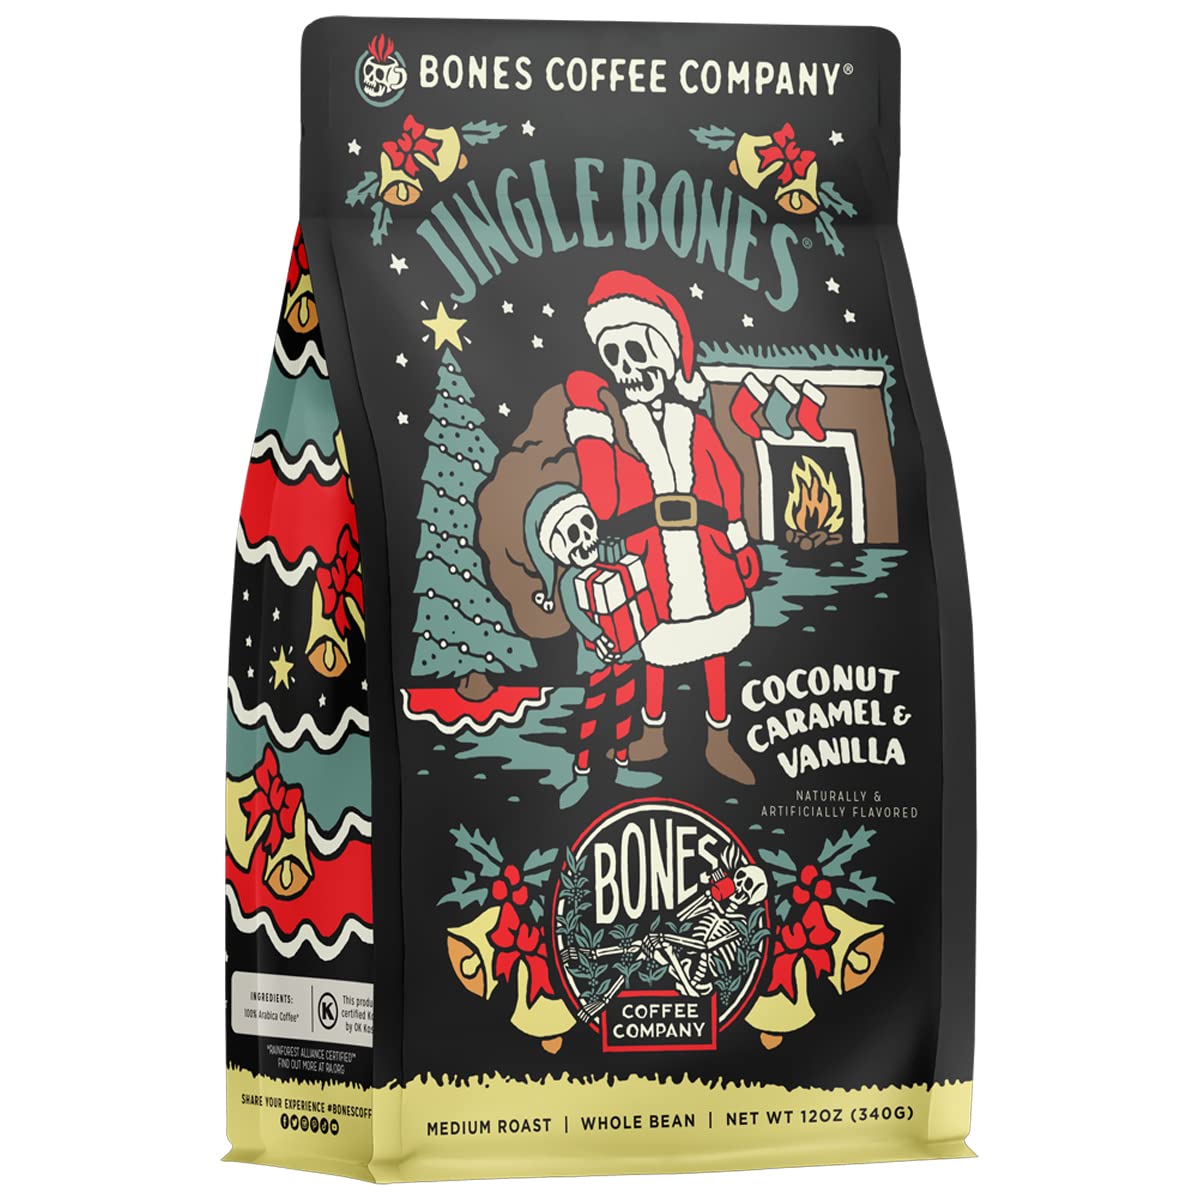 Bones Coffee Company Jingle Bones Whole Coffee Beans Caramel Vanilla & Coconut Flavor | 12 oz Flavored Coffee Gifts Low Acid Medium Roast Gourmet Coffee Beverages (Whole Bean)